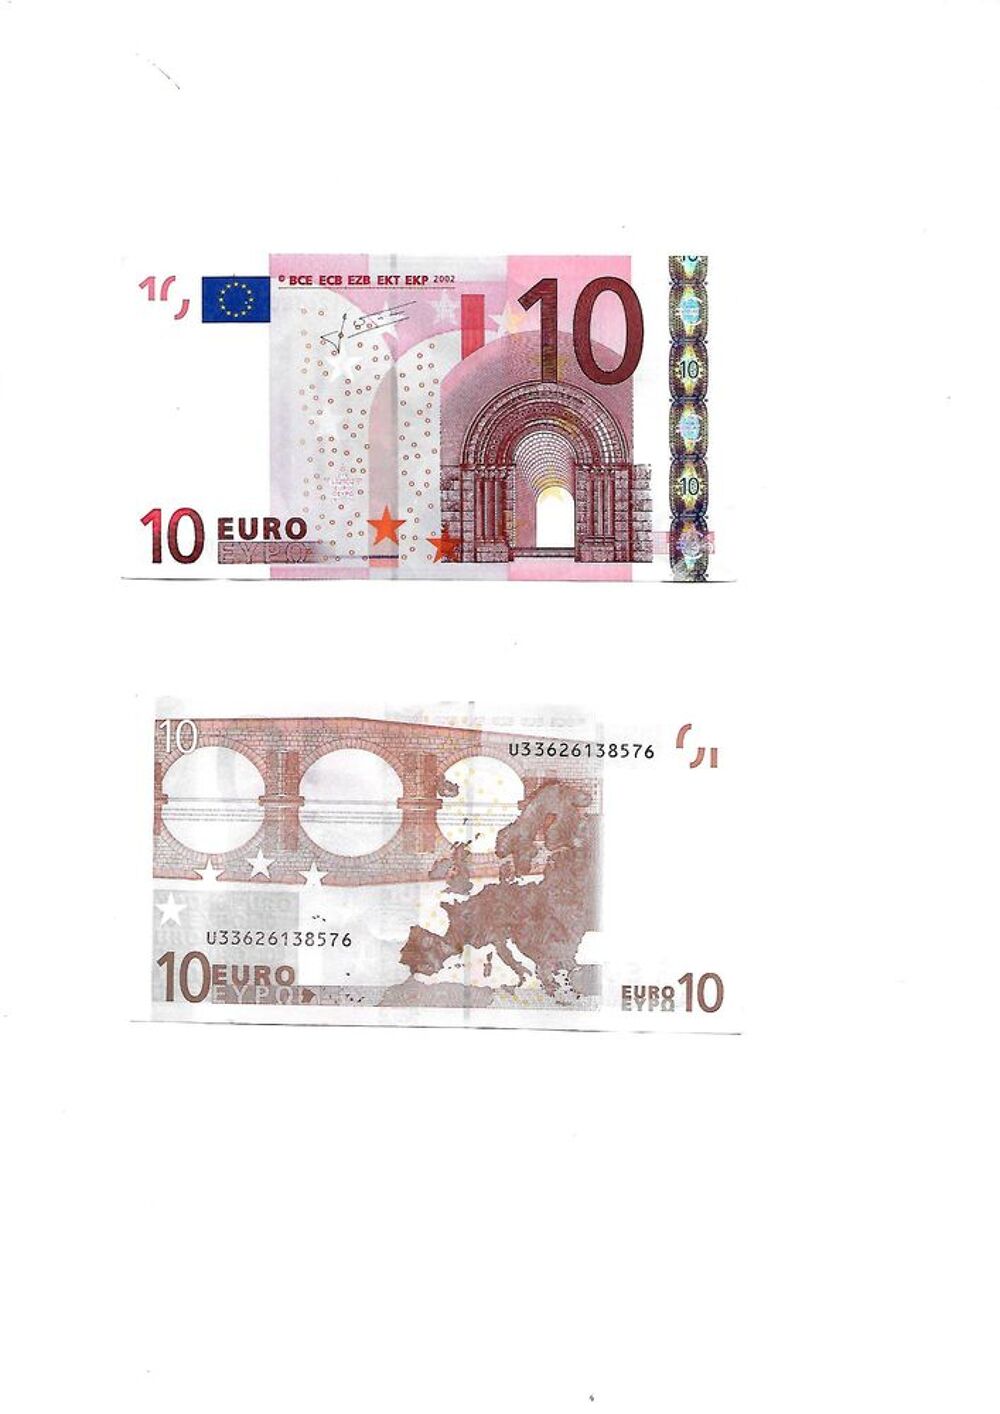 Billets de Banque en EUROS de 2002 